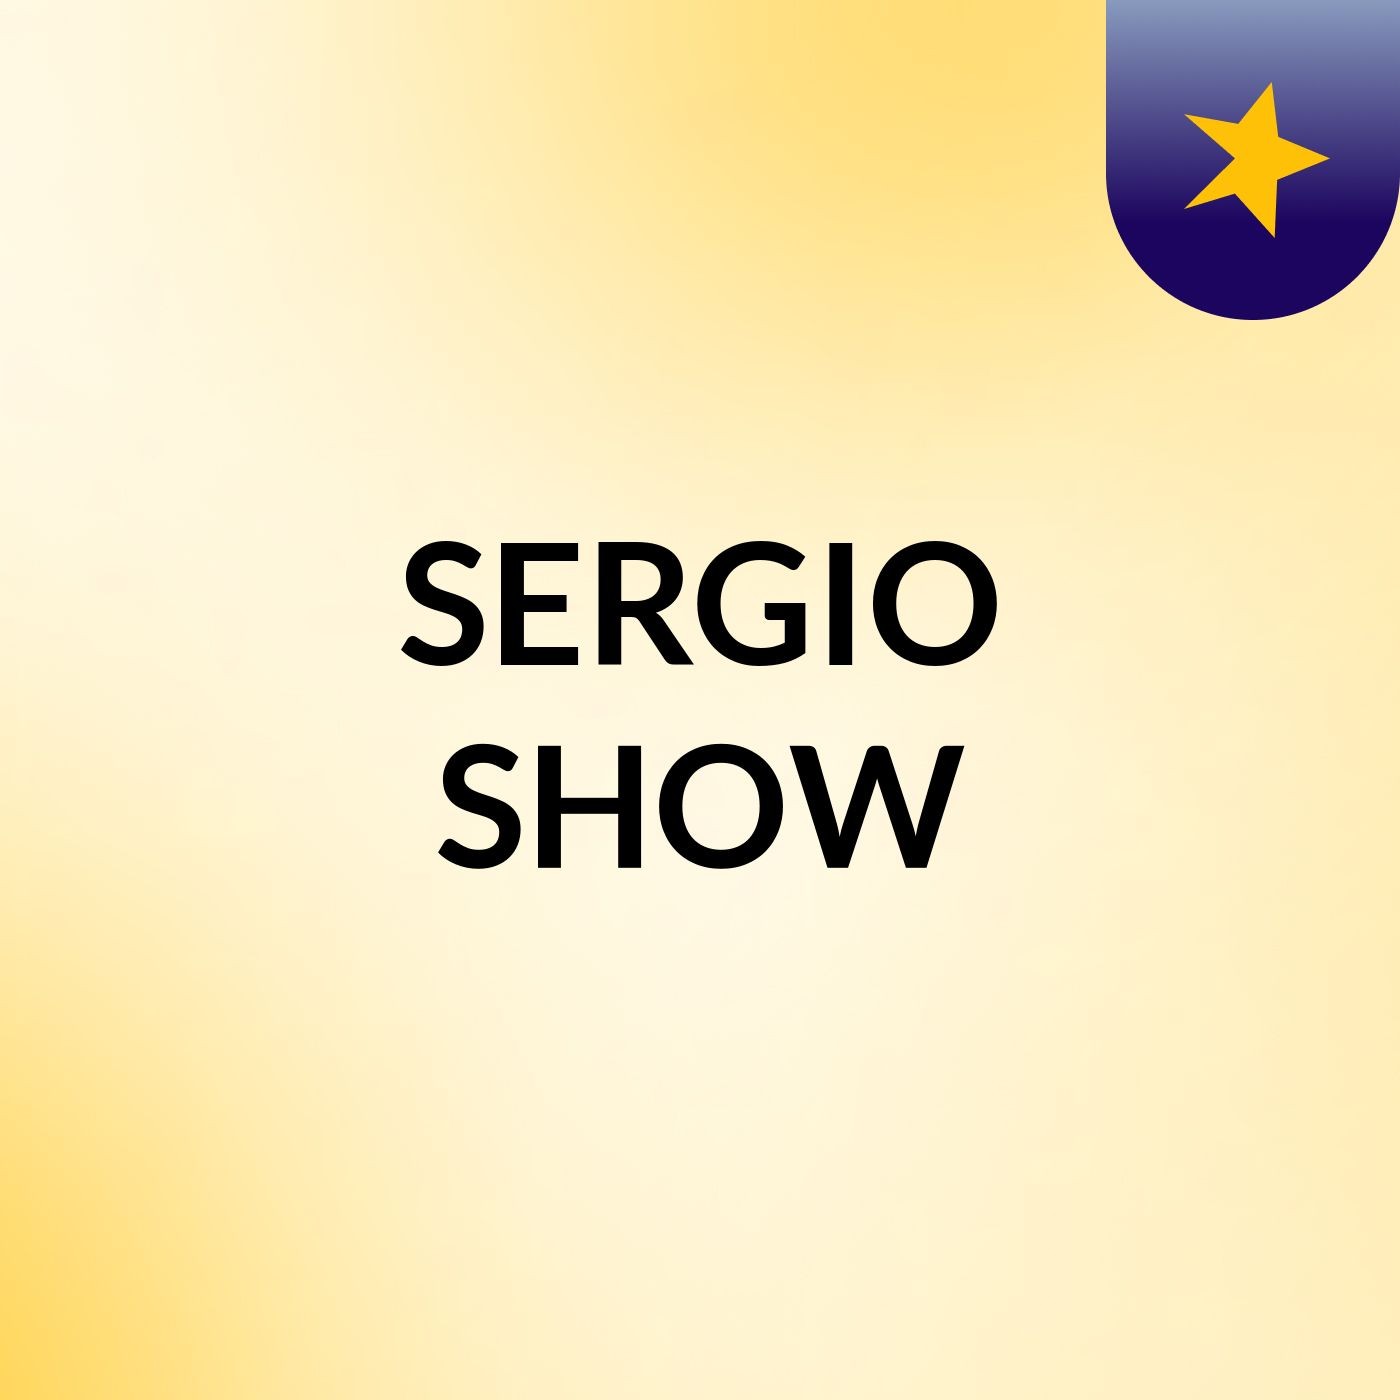 SERGIO SHOW